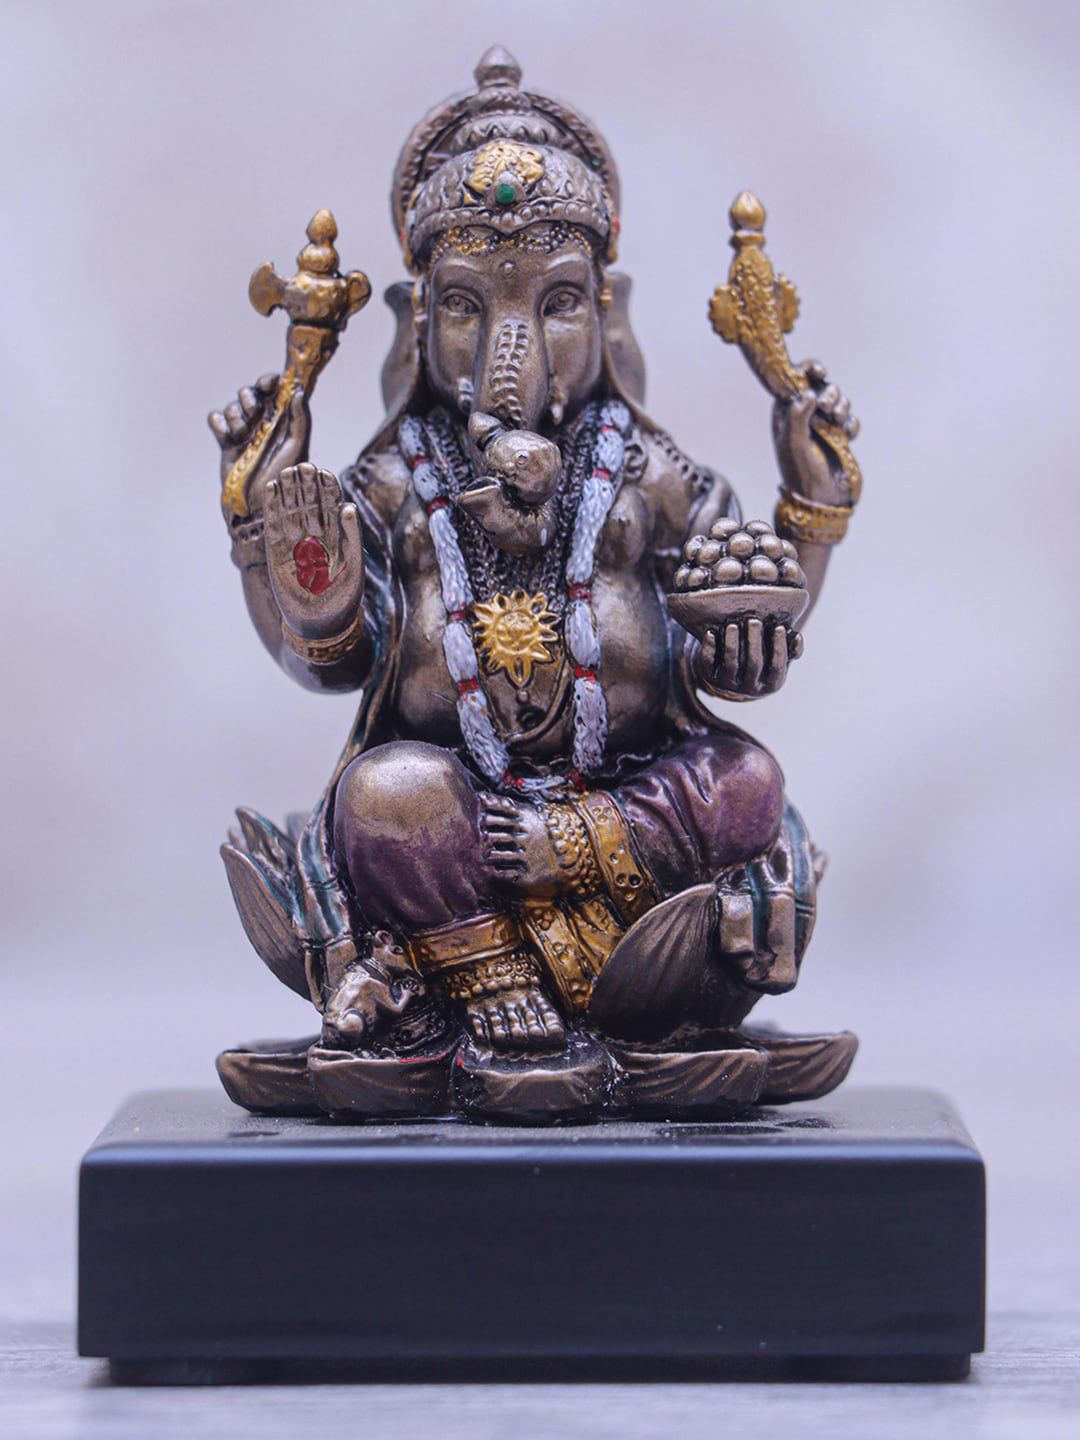 StatueStudio Metallic-Toned Textured Ganesha Statue Sitting On Base Showpiece Price in India